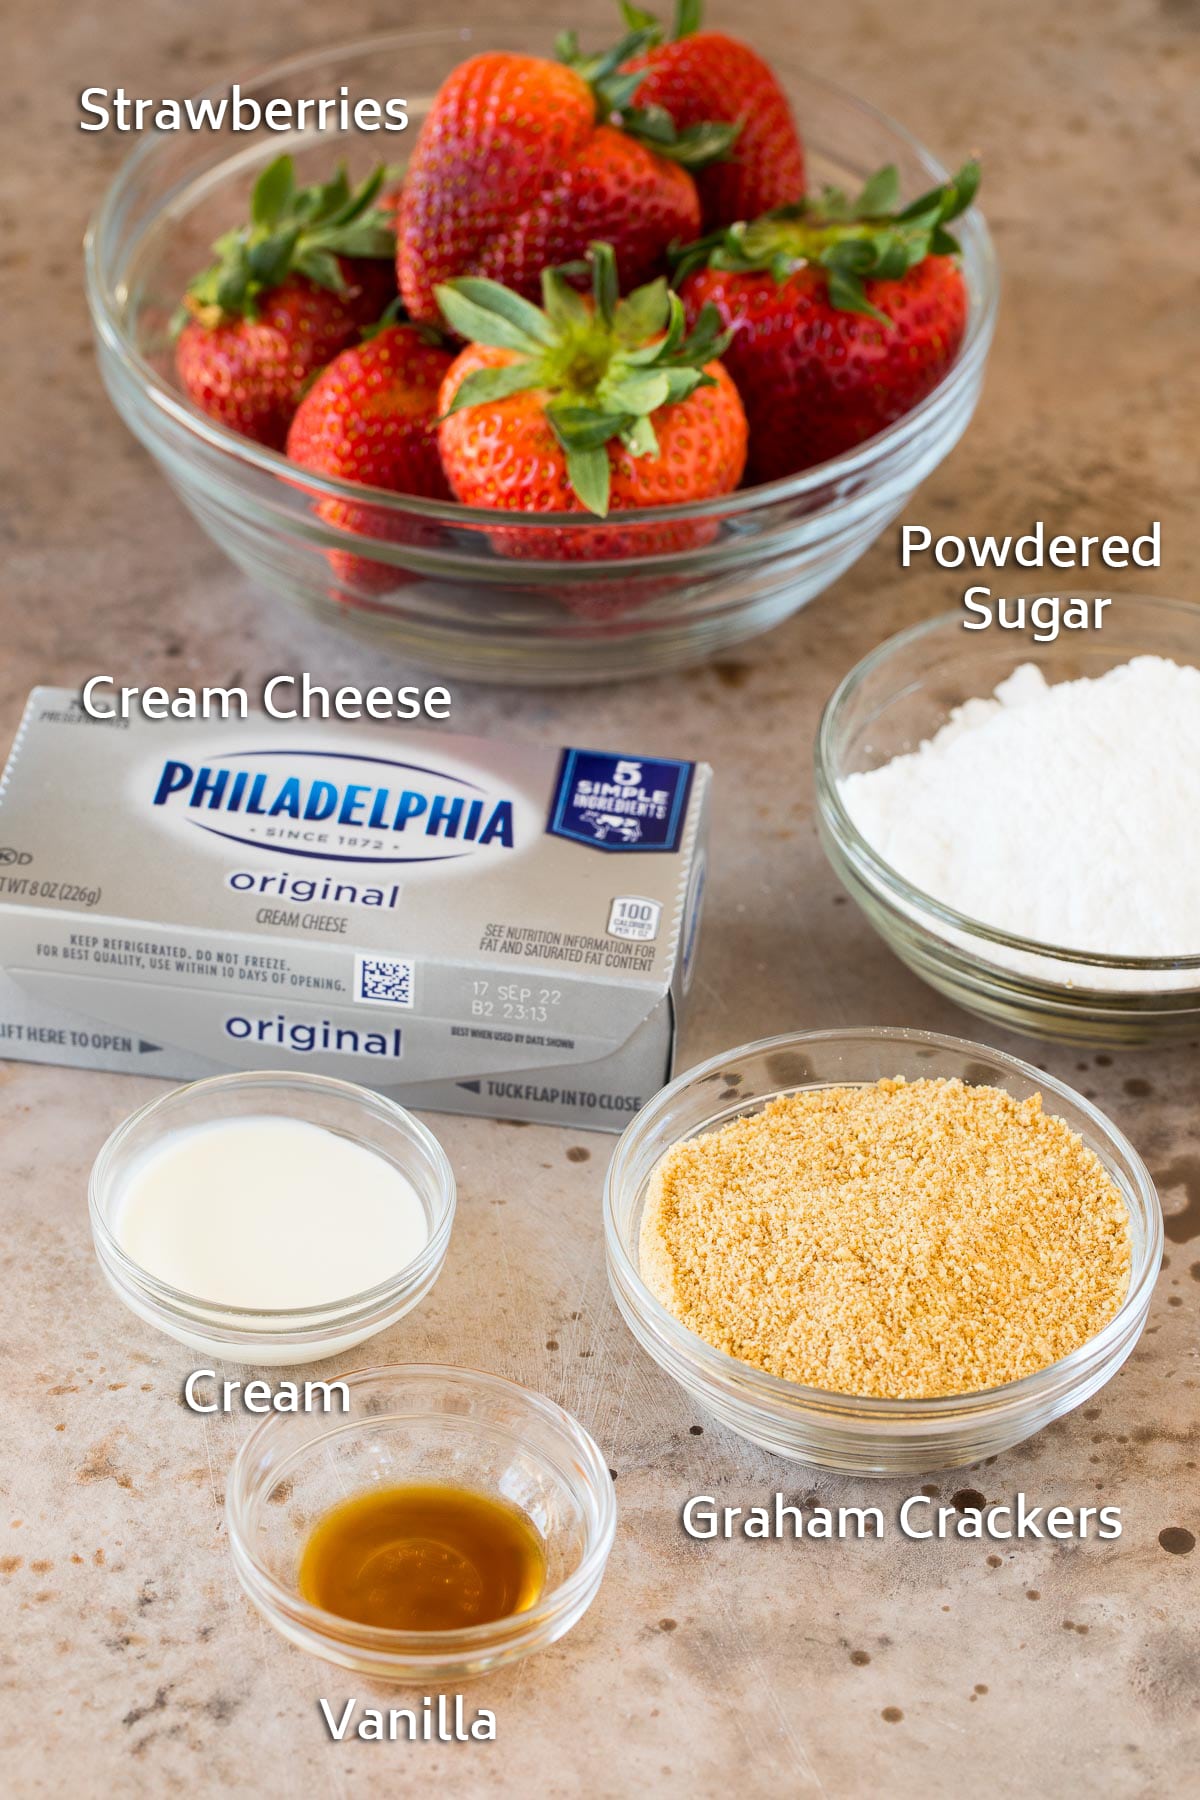 Ingredients including strawberries, cream cheese, sugar and graham cracker crumbs.